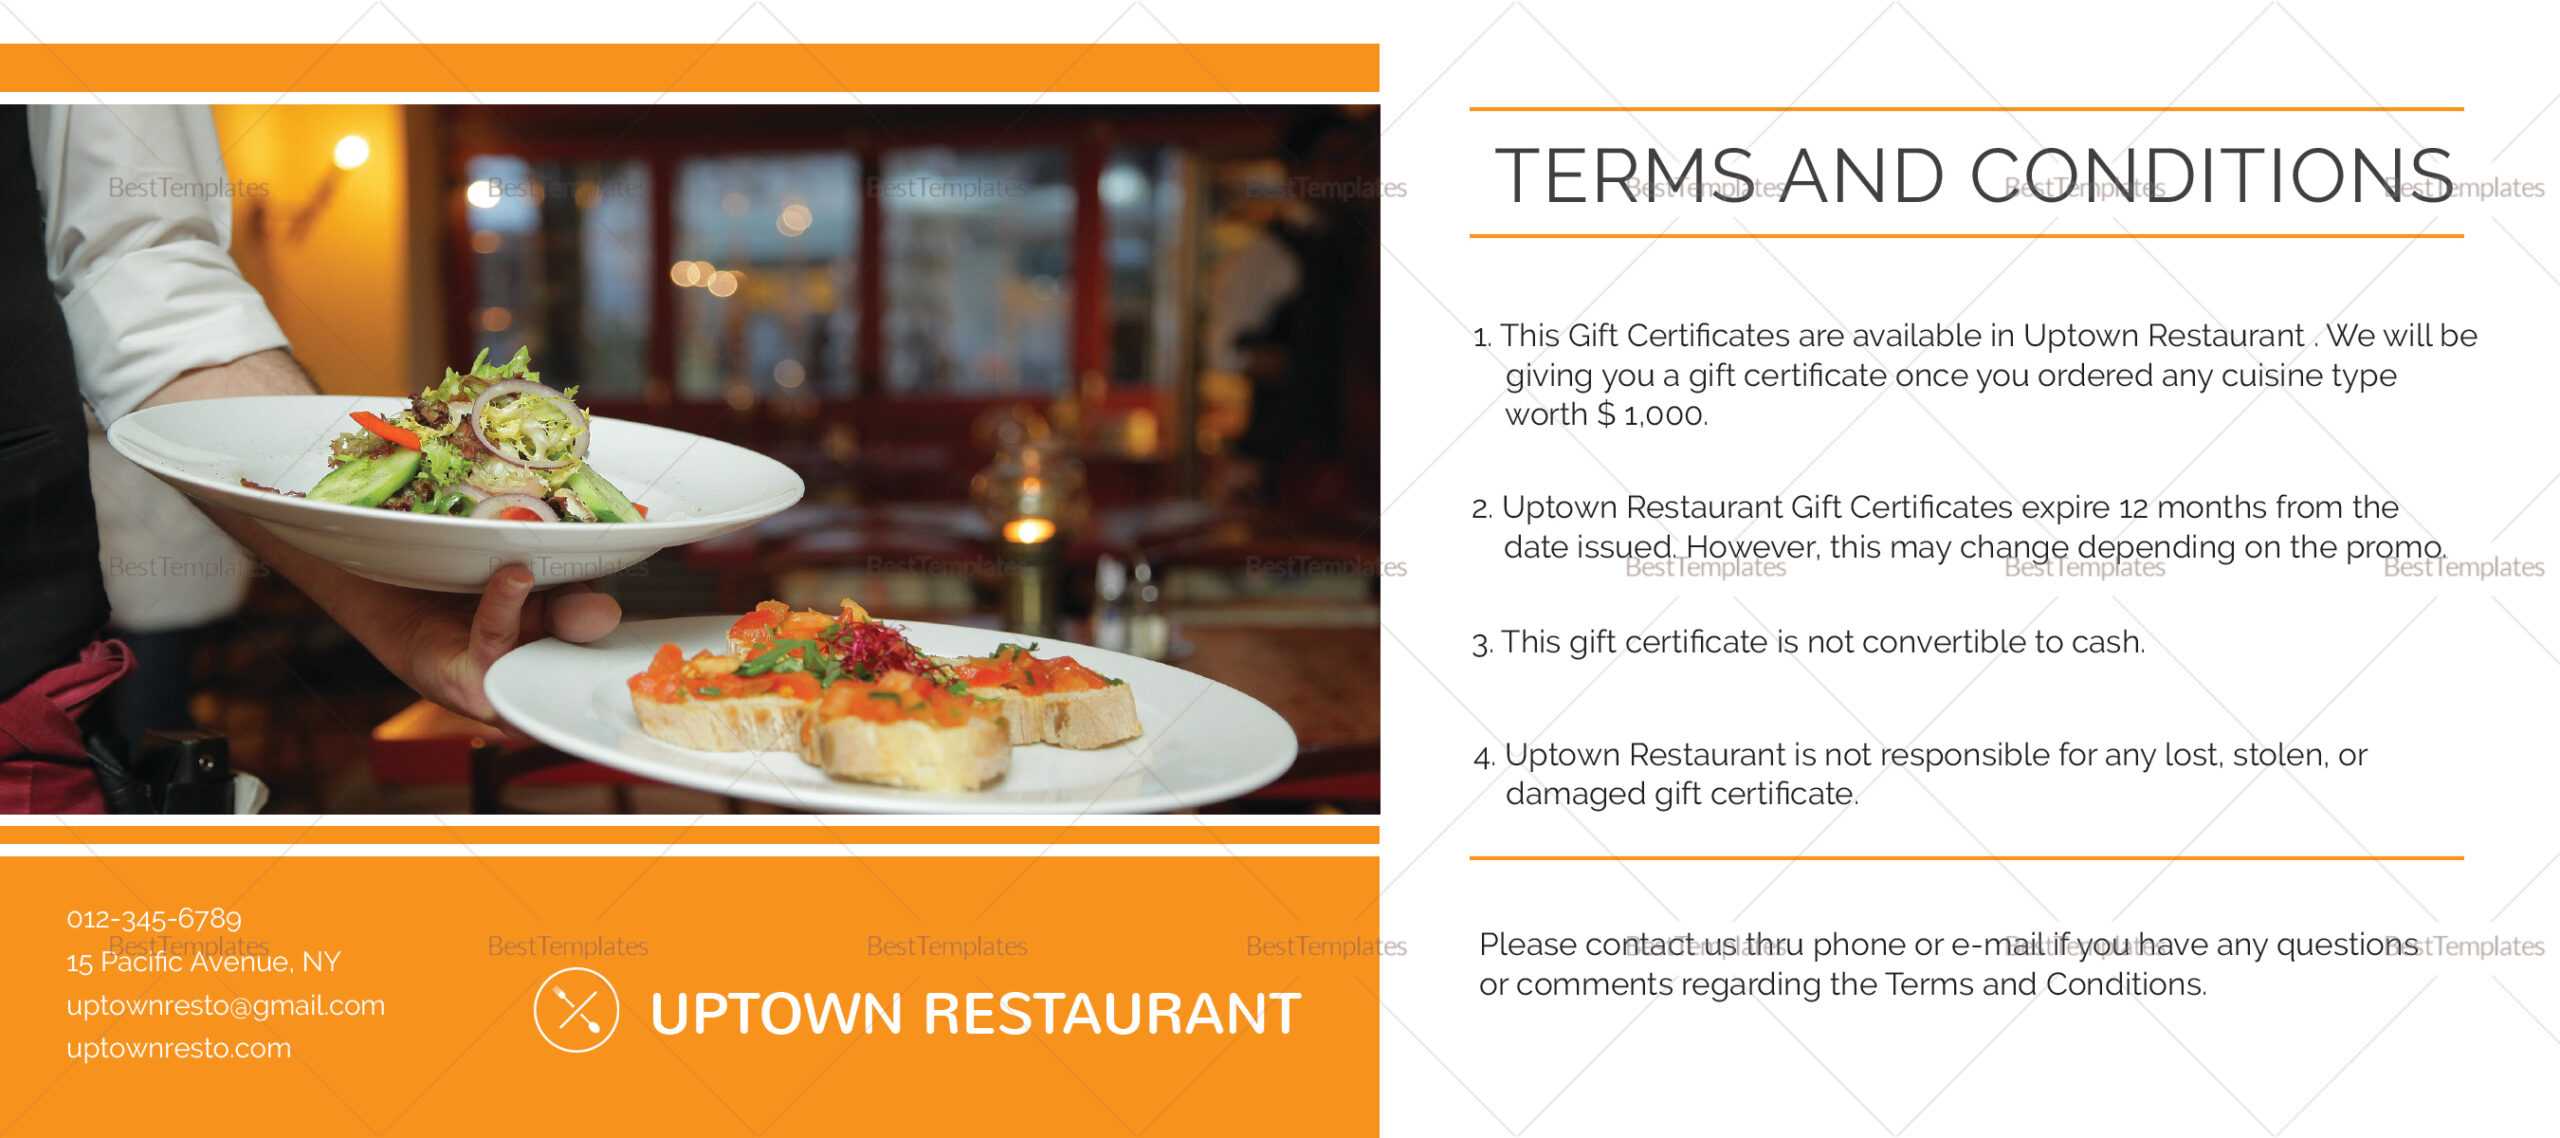 Restaurant Gift Certificate Template Regarding Restaurant Gift Certificate Template